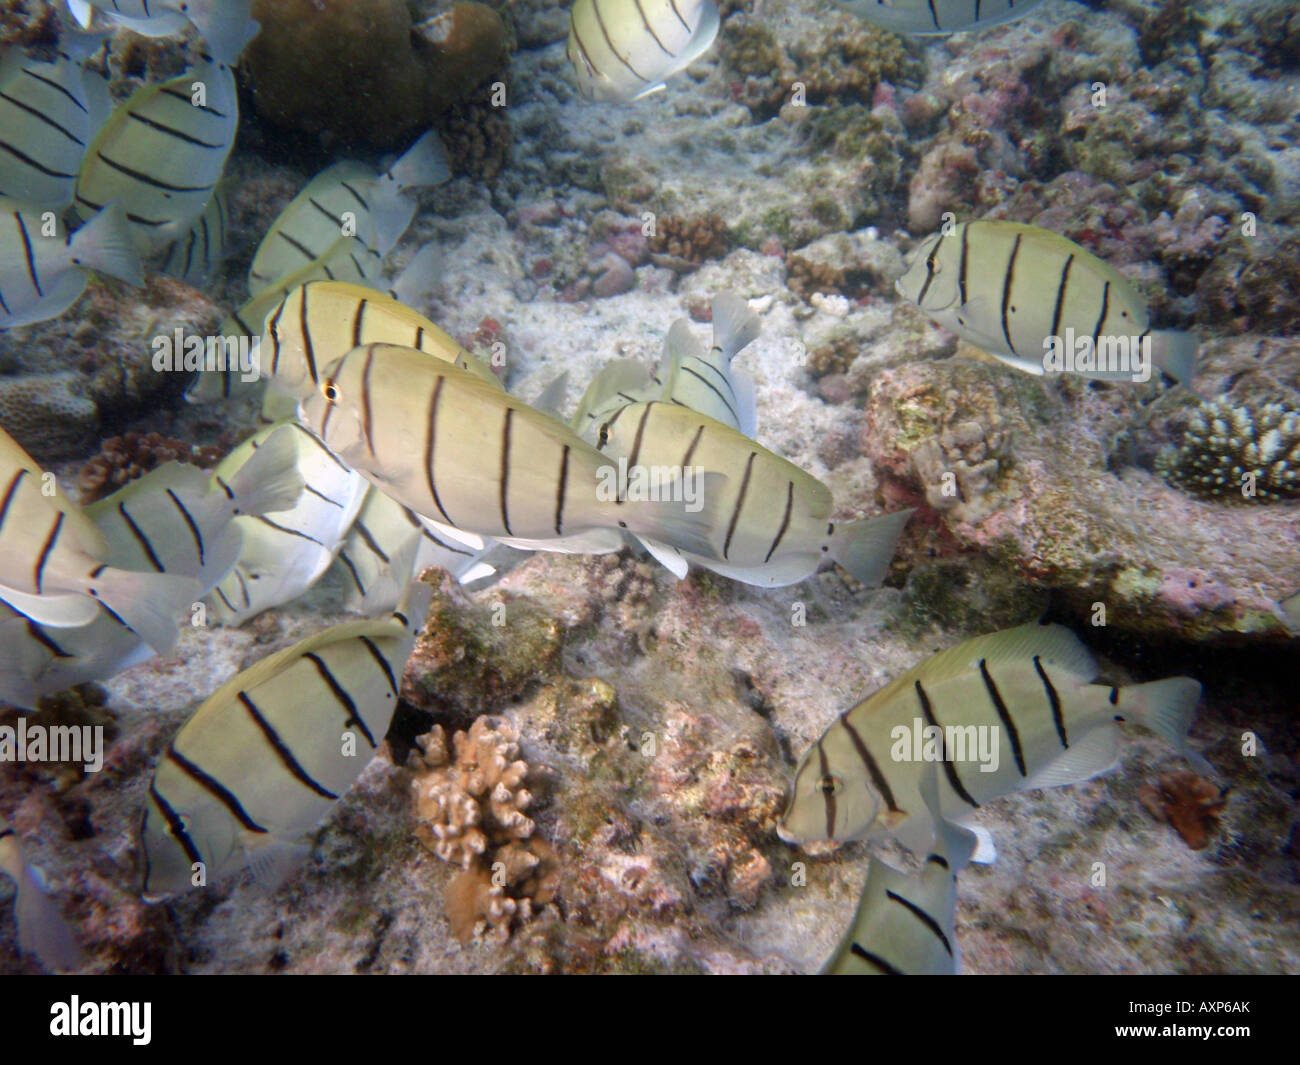 Convict Surgeonfish (Convict Tang) [Bandos Island Reef, Kaafu Atoll, Maldives, Asia]                                           . Stock Photo